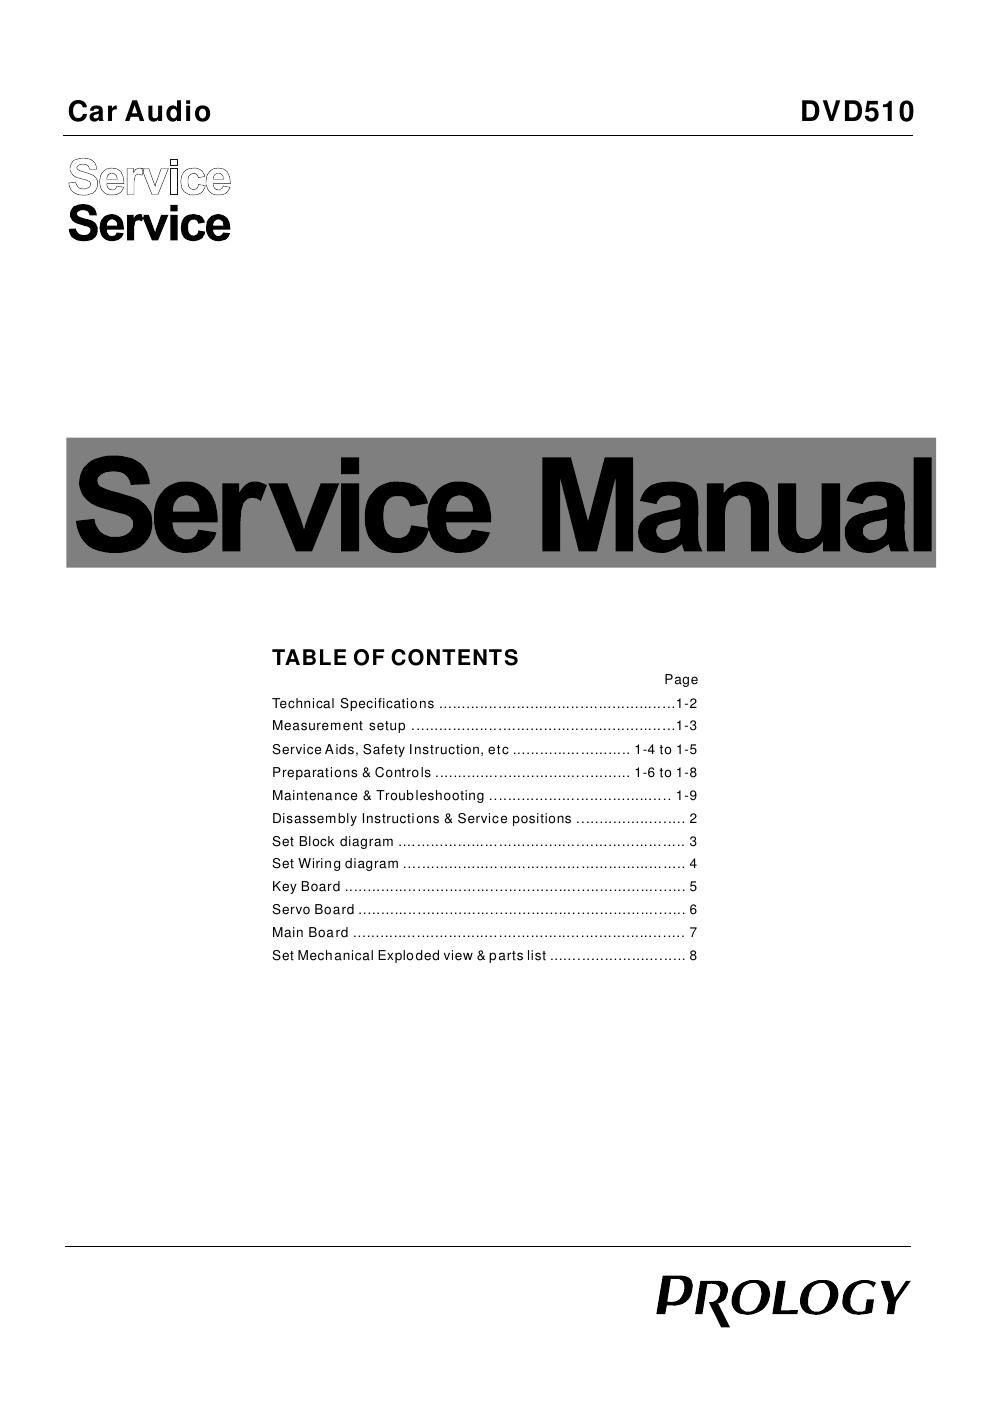 prology dvd 510 service manual